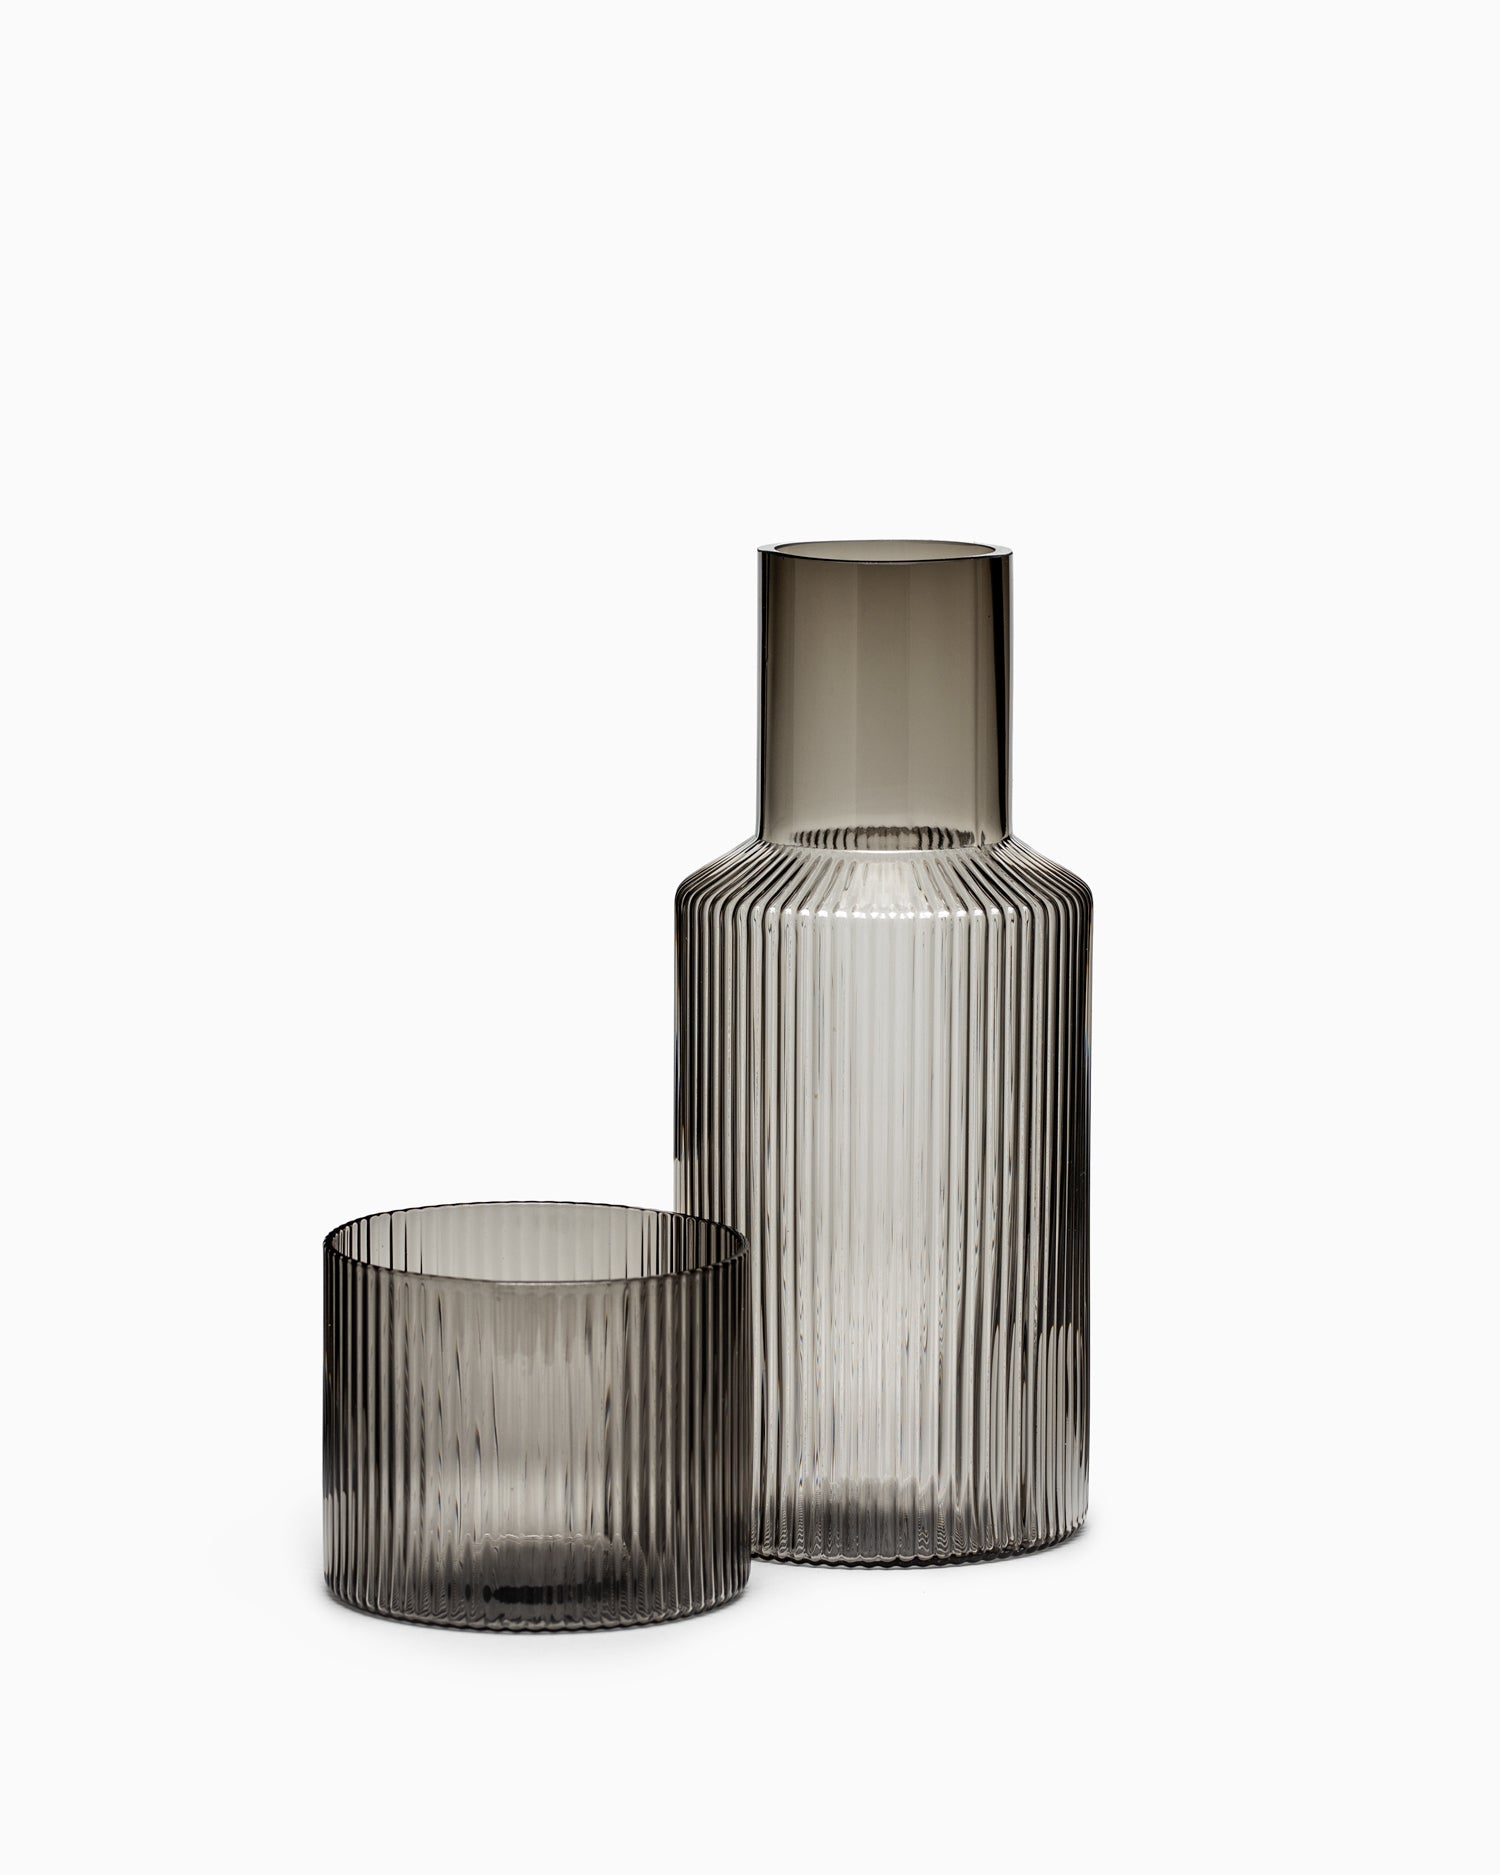 Ferm Living - Ripple Carafe Set - Small - Smoked Grey